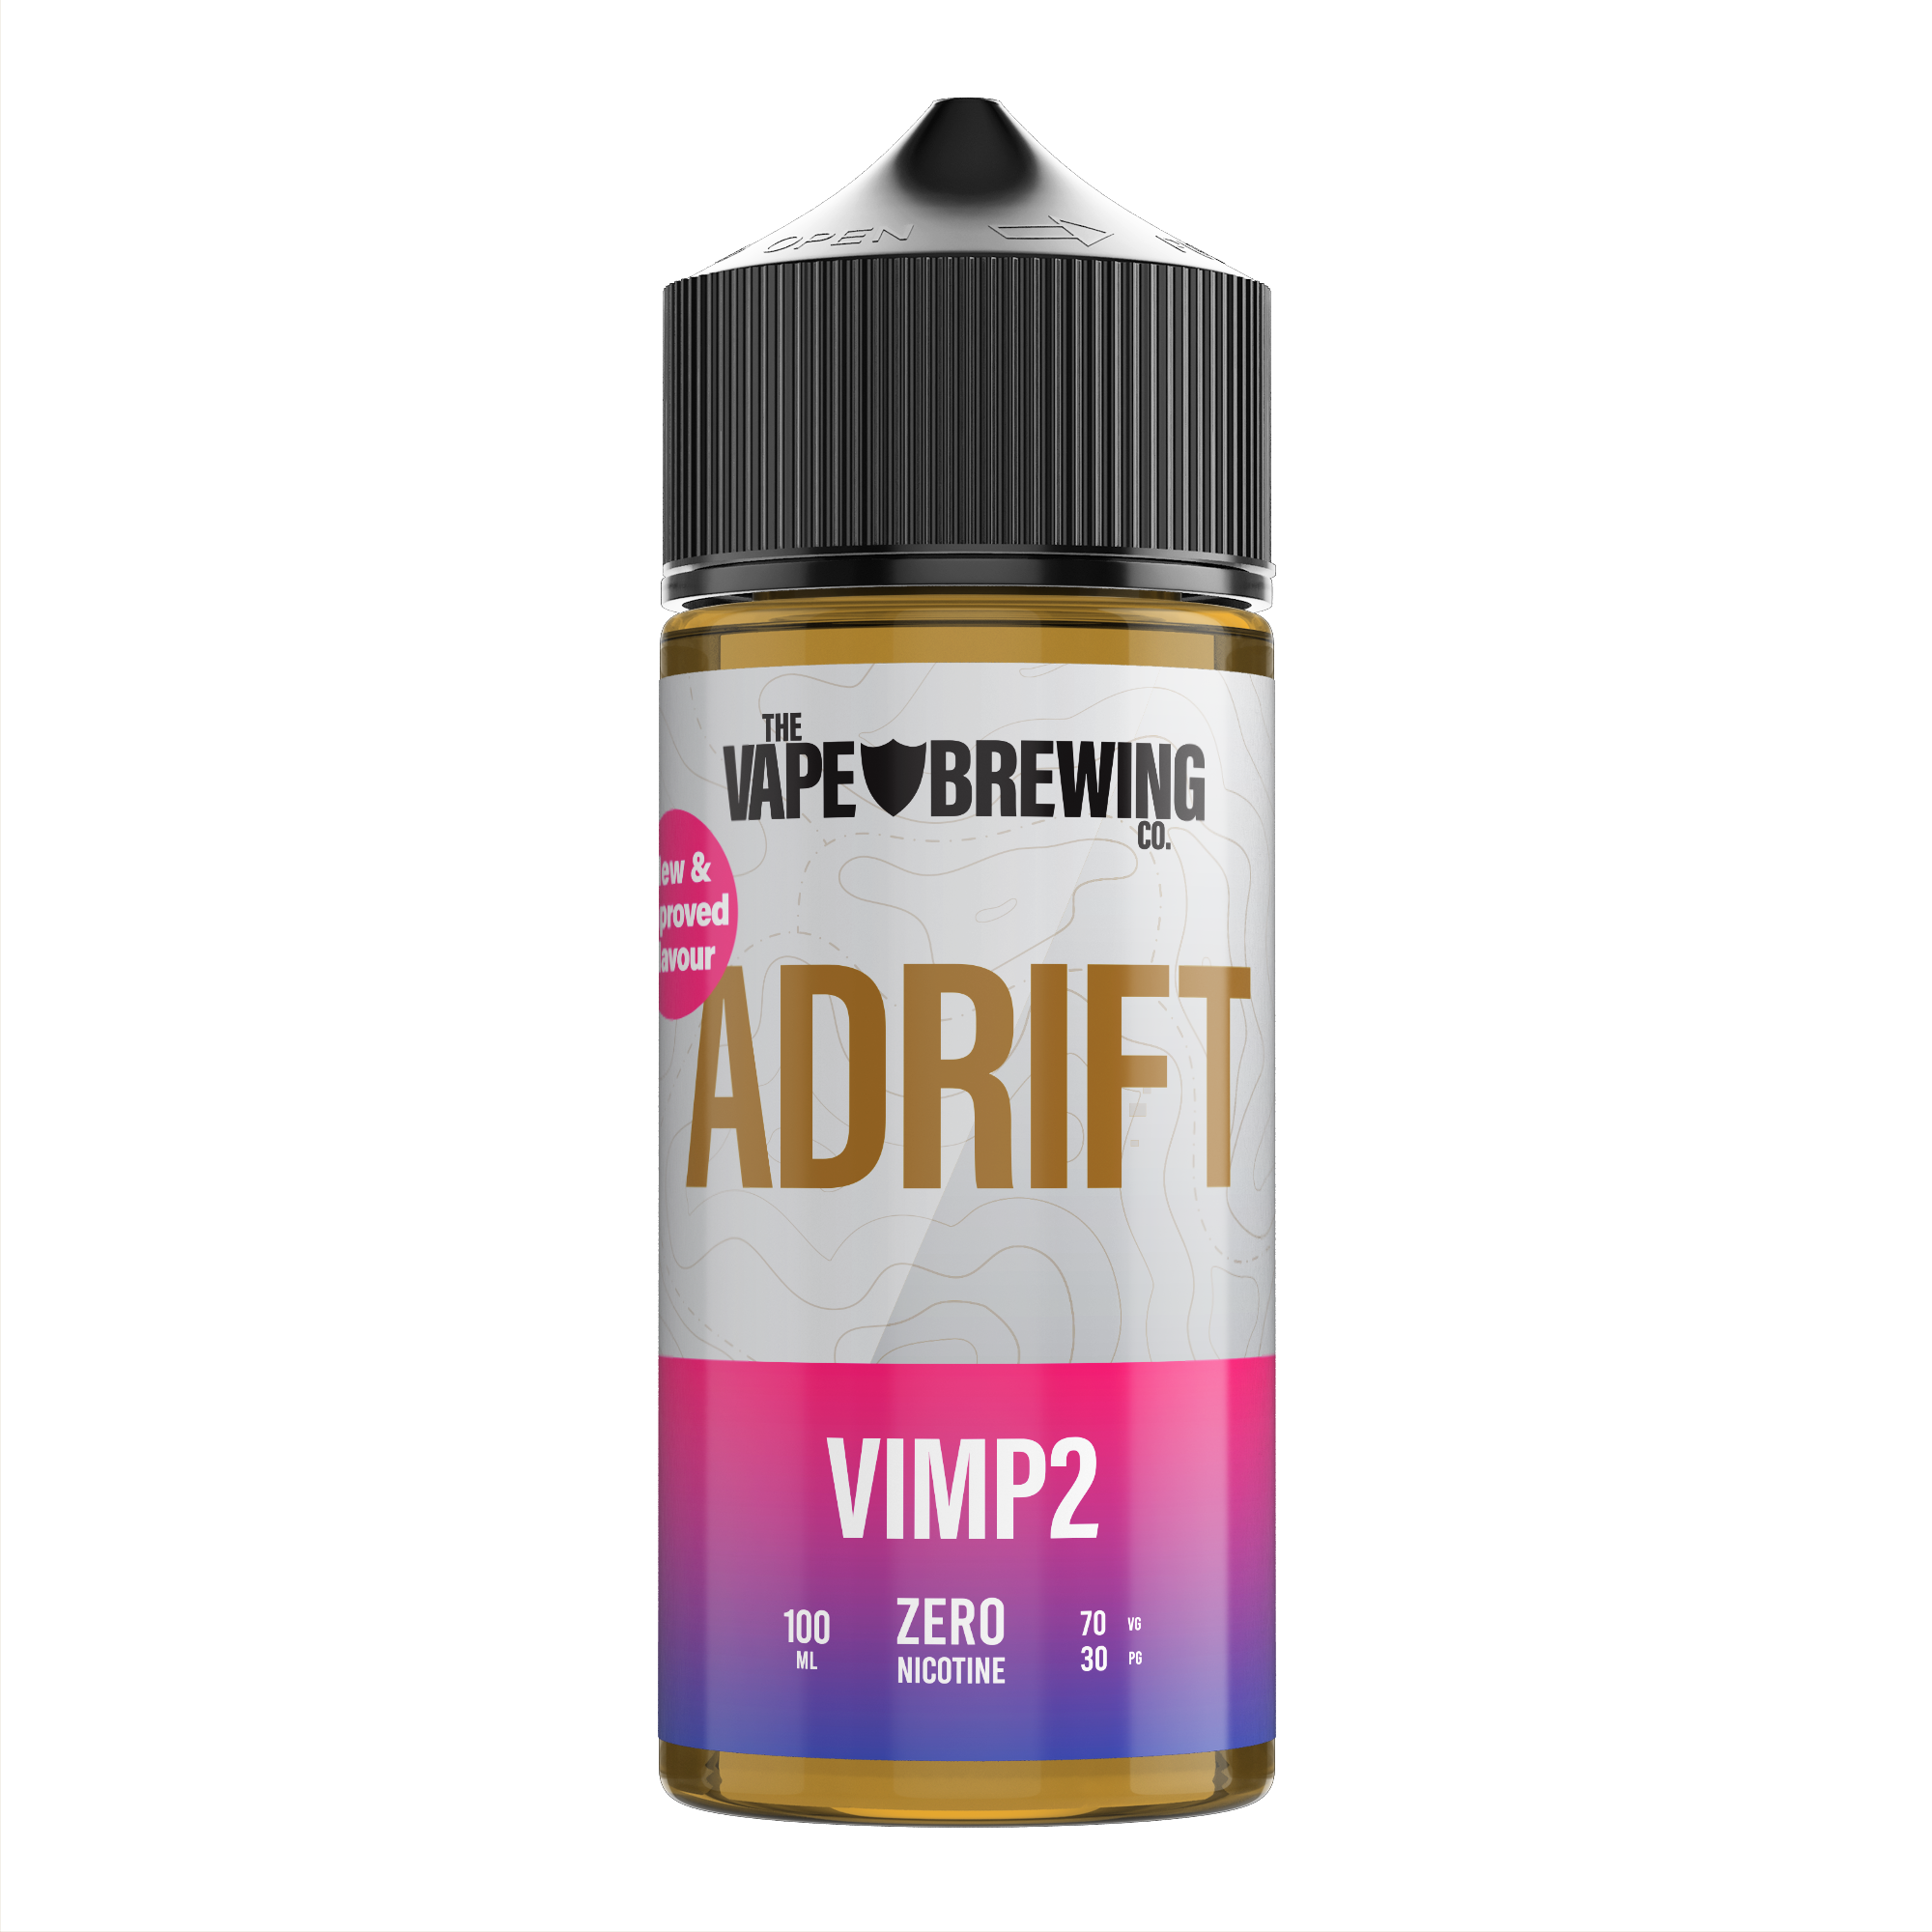 Vimp2 100ml Shortfill by Adrift Vape Brewing Co.